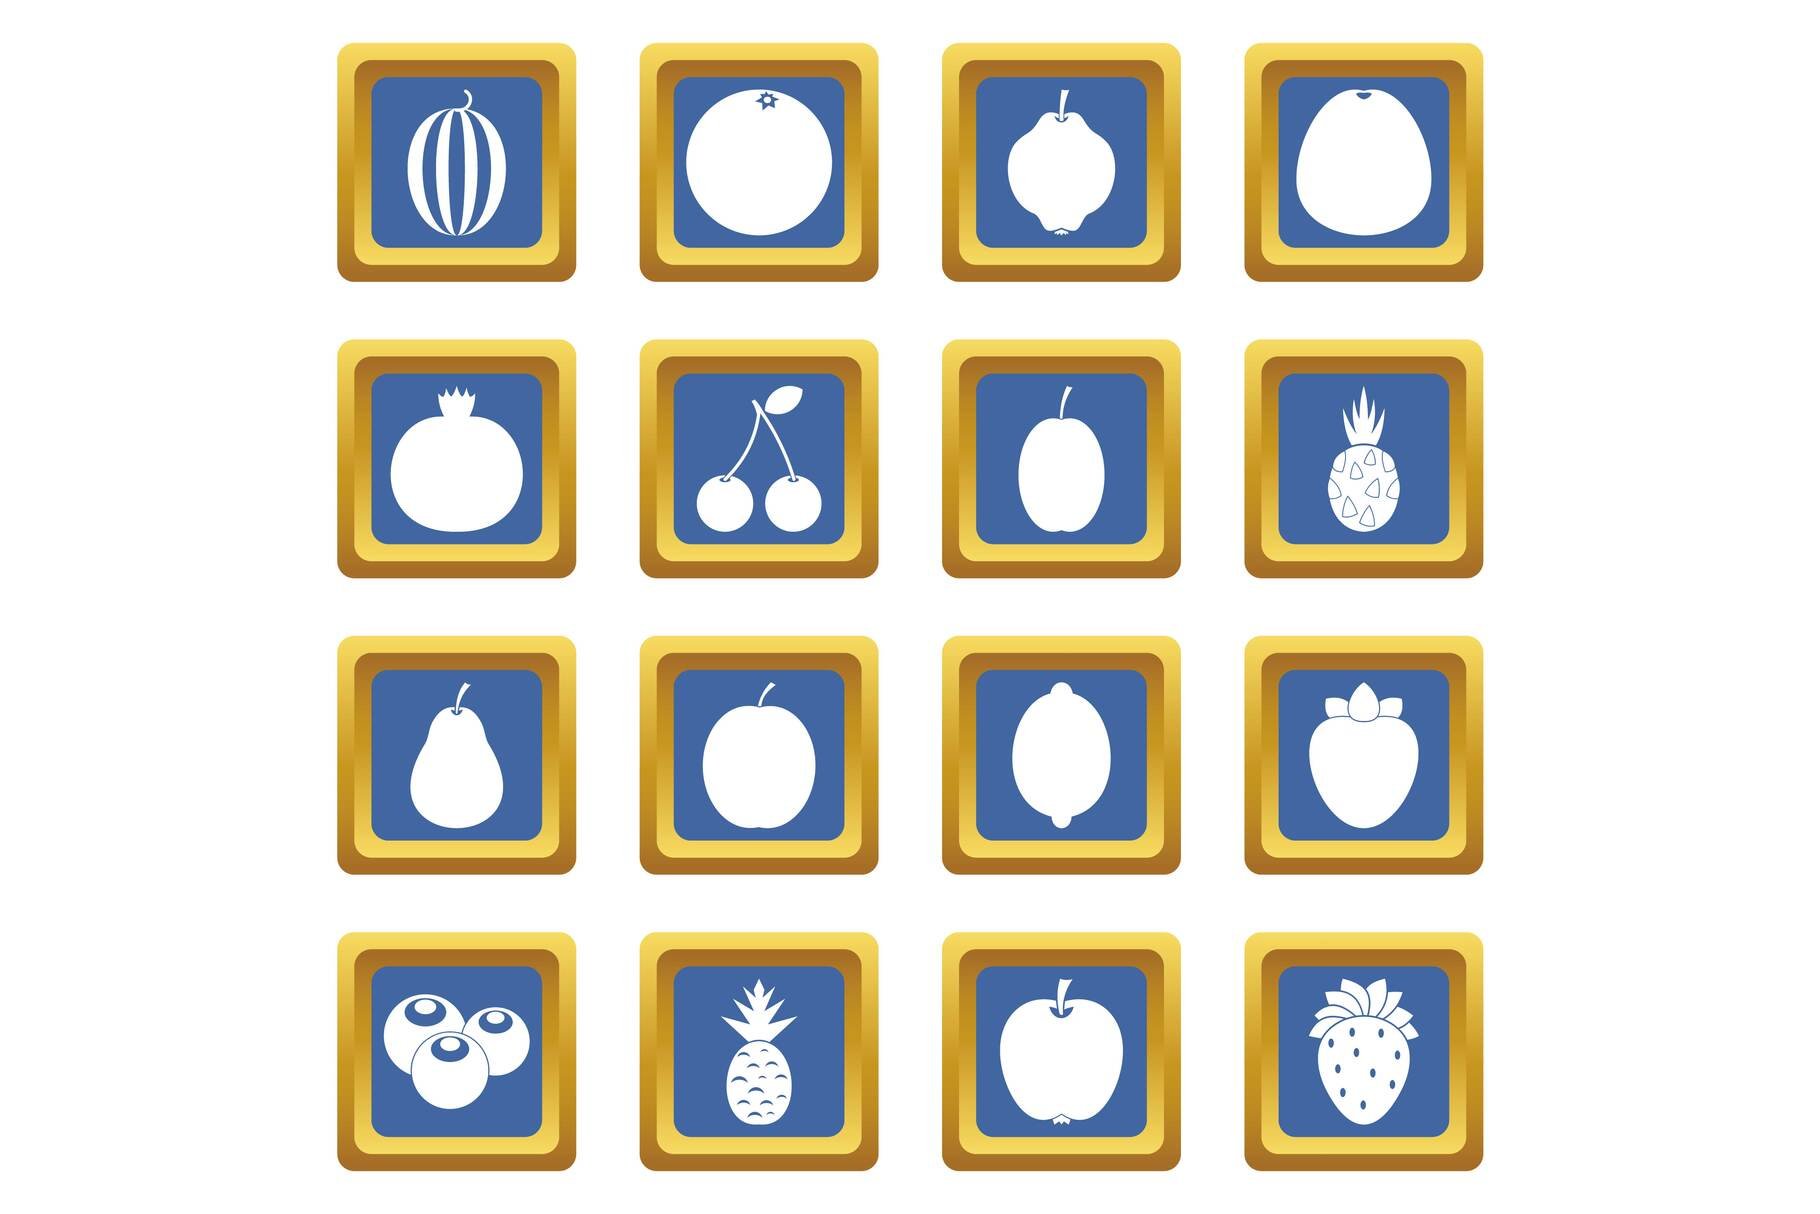 Fruit icons set blue cover image.